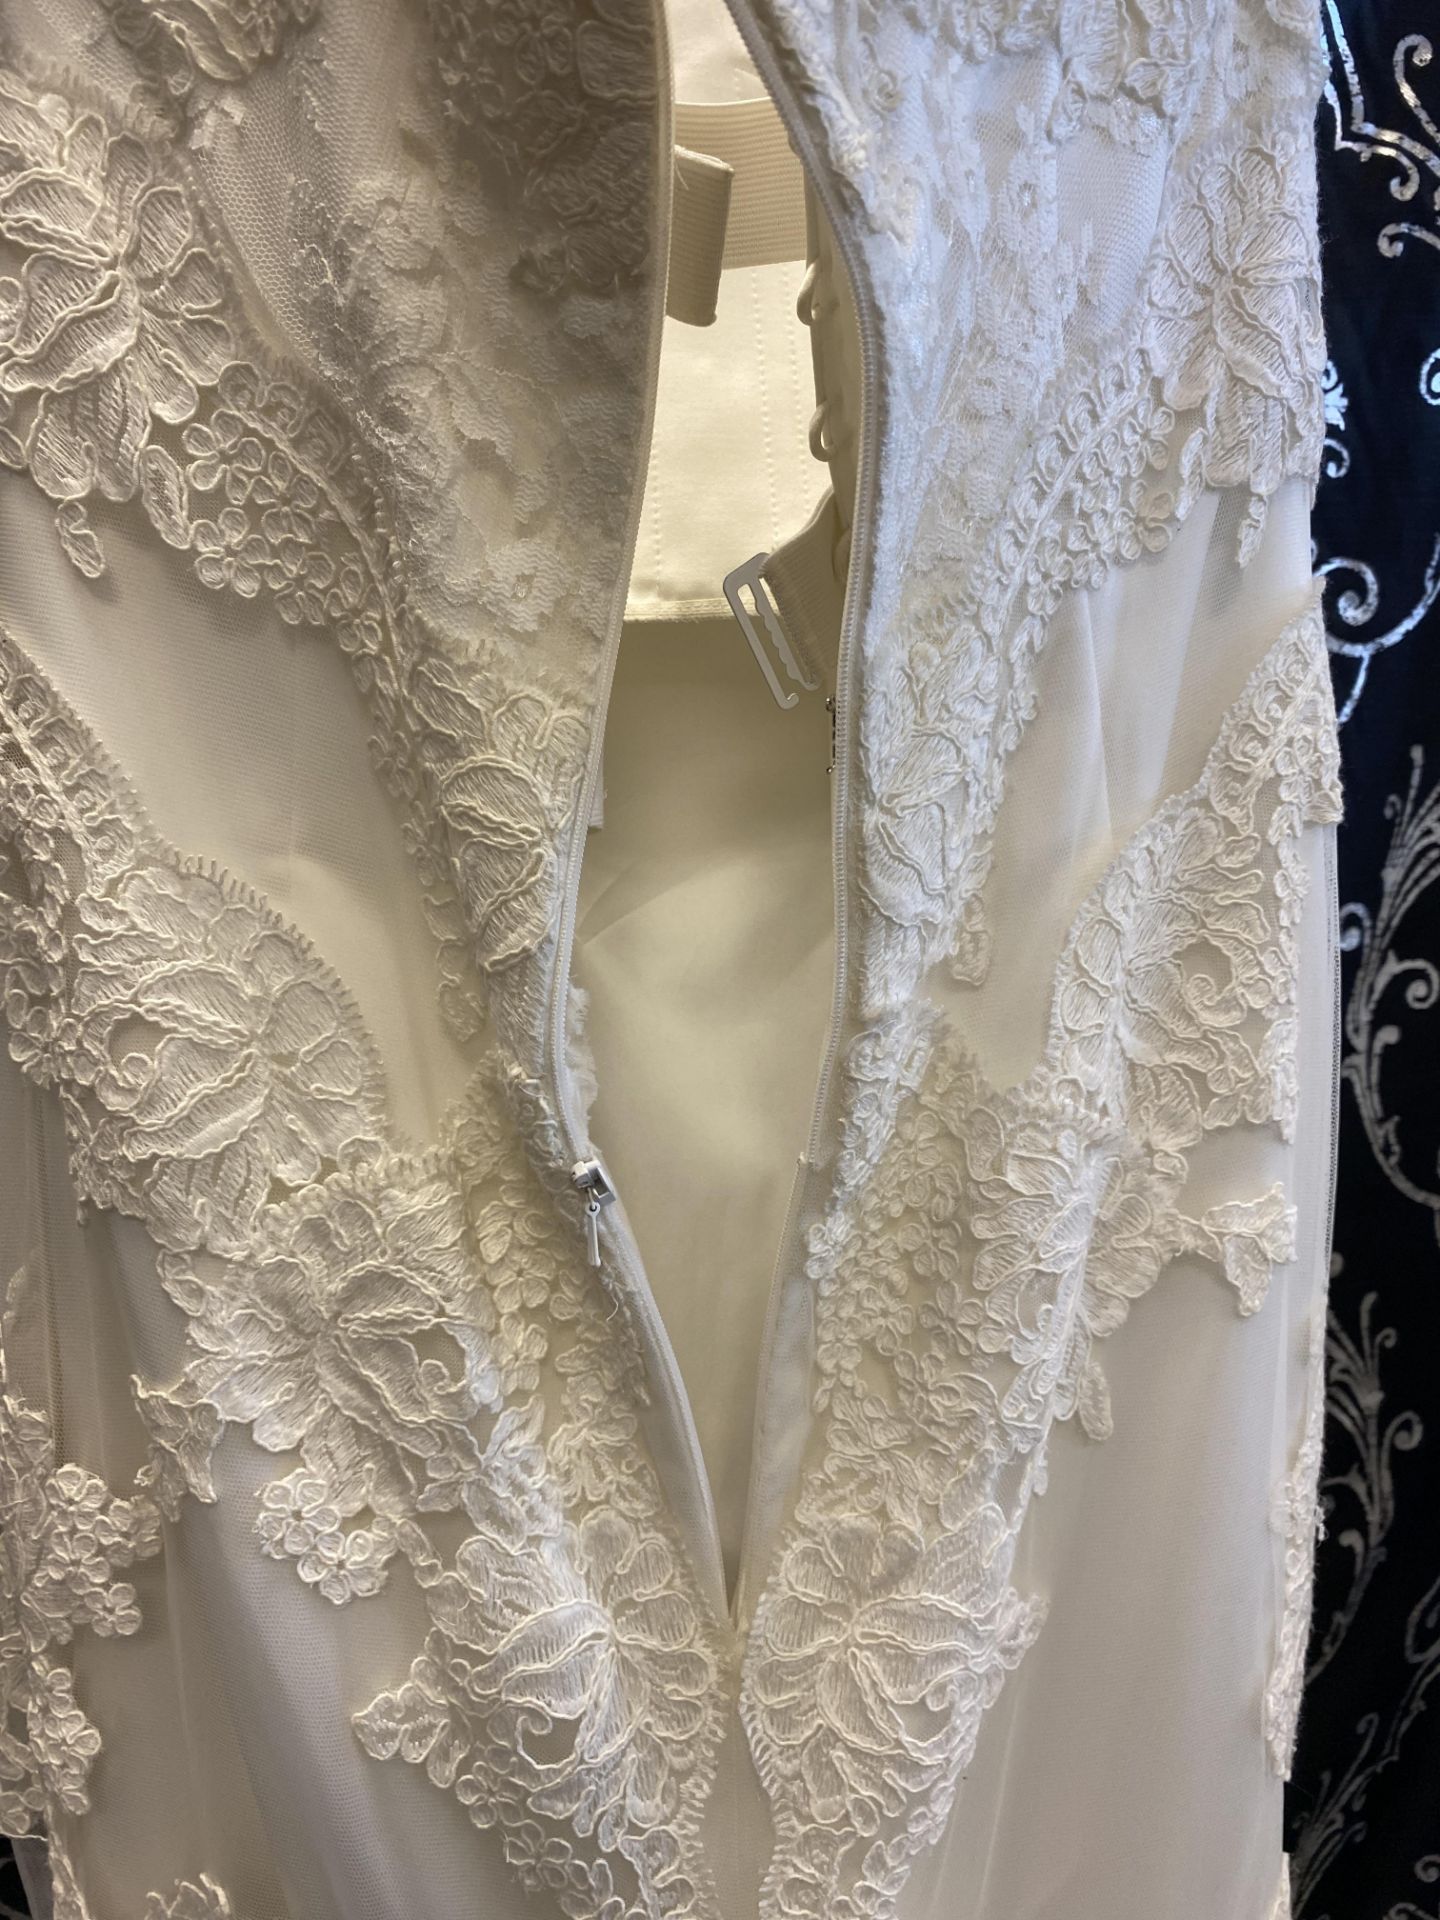 1 x LUSAN MANDONGUS 'Valli' Stunning Strapless Lace Overlay Designer Wedding Dress RRP £1,575 UK10 - Image 6 of 9